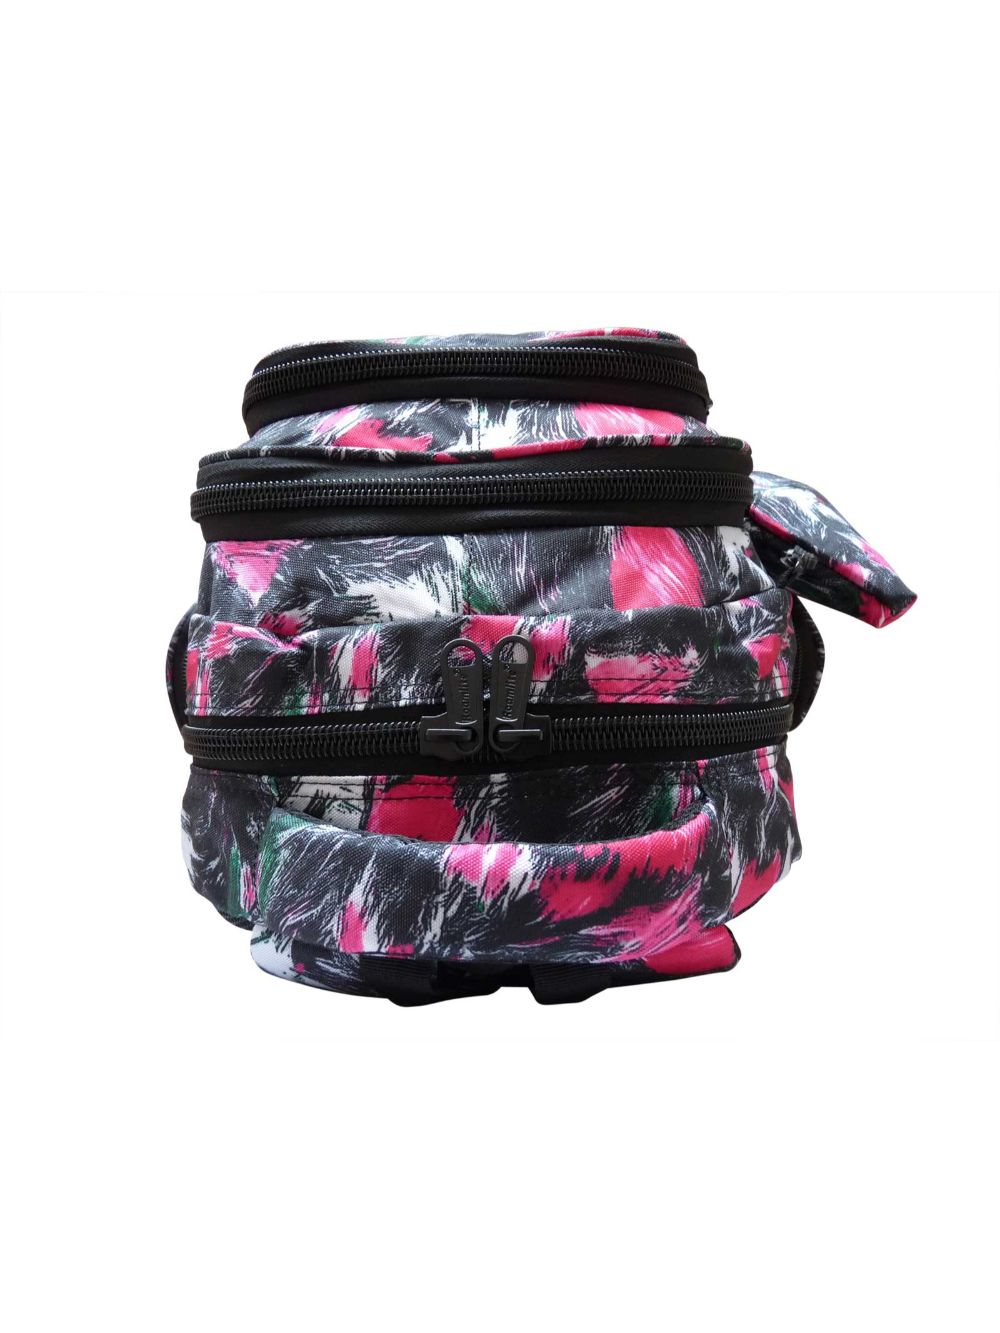 Roamlite Childrens Backpack Pink Paint pattern RL839  top